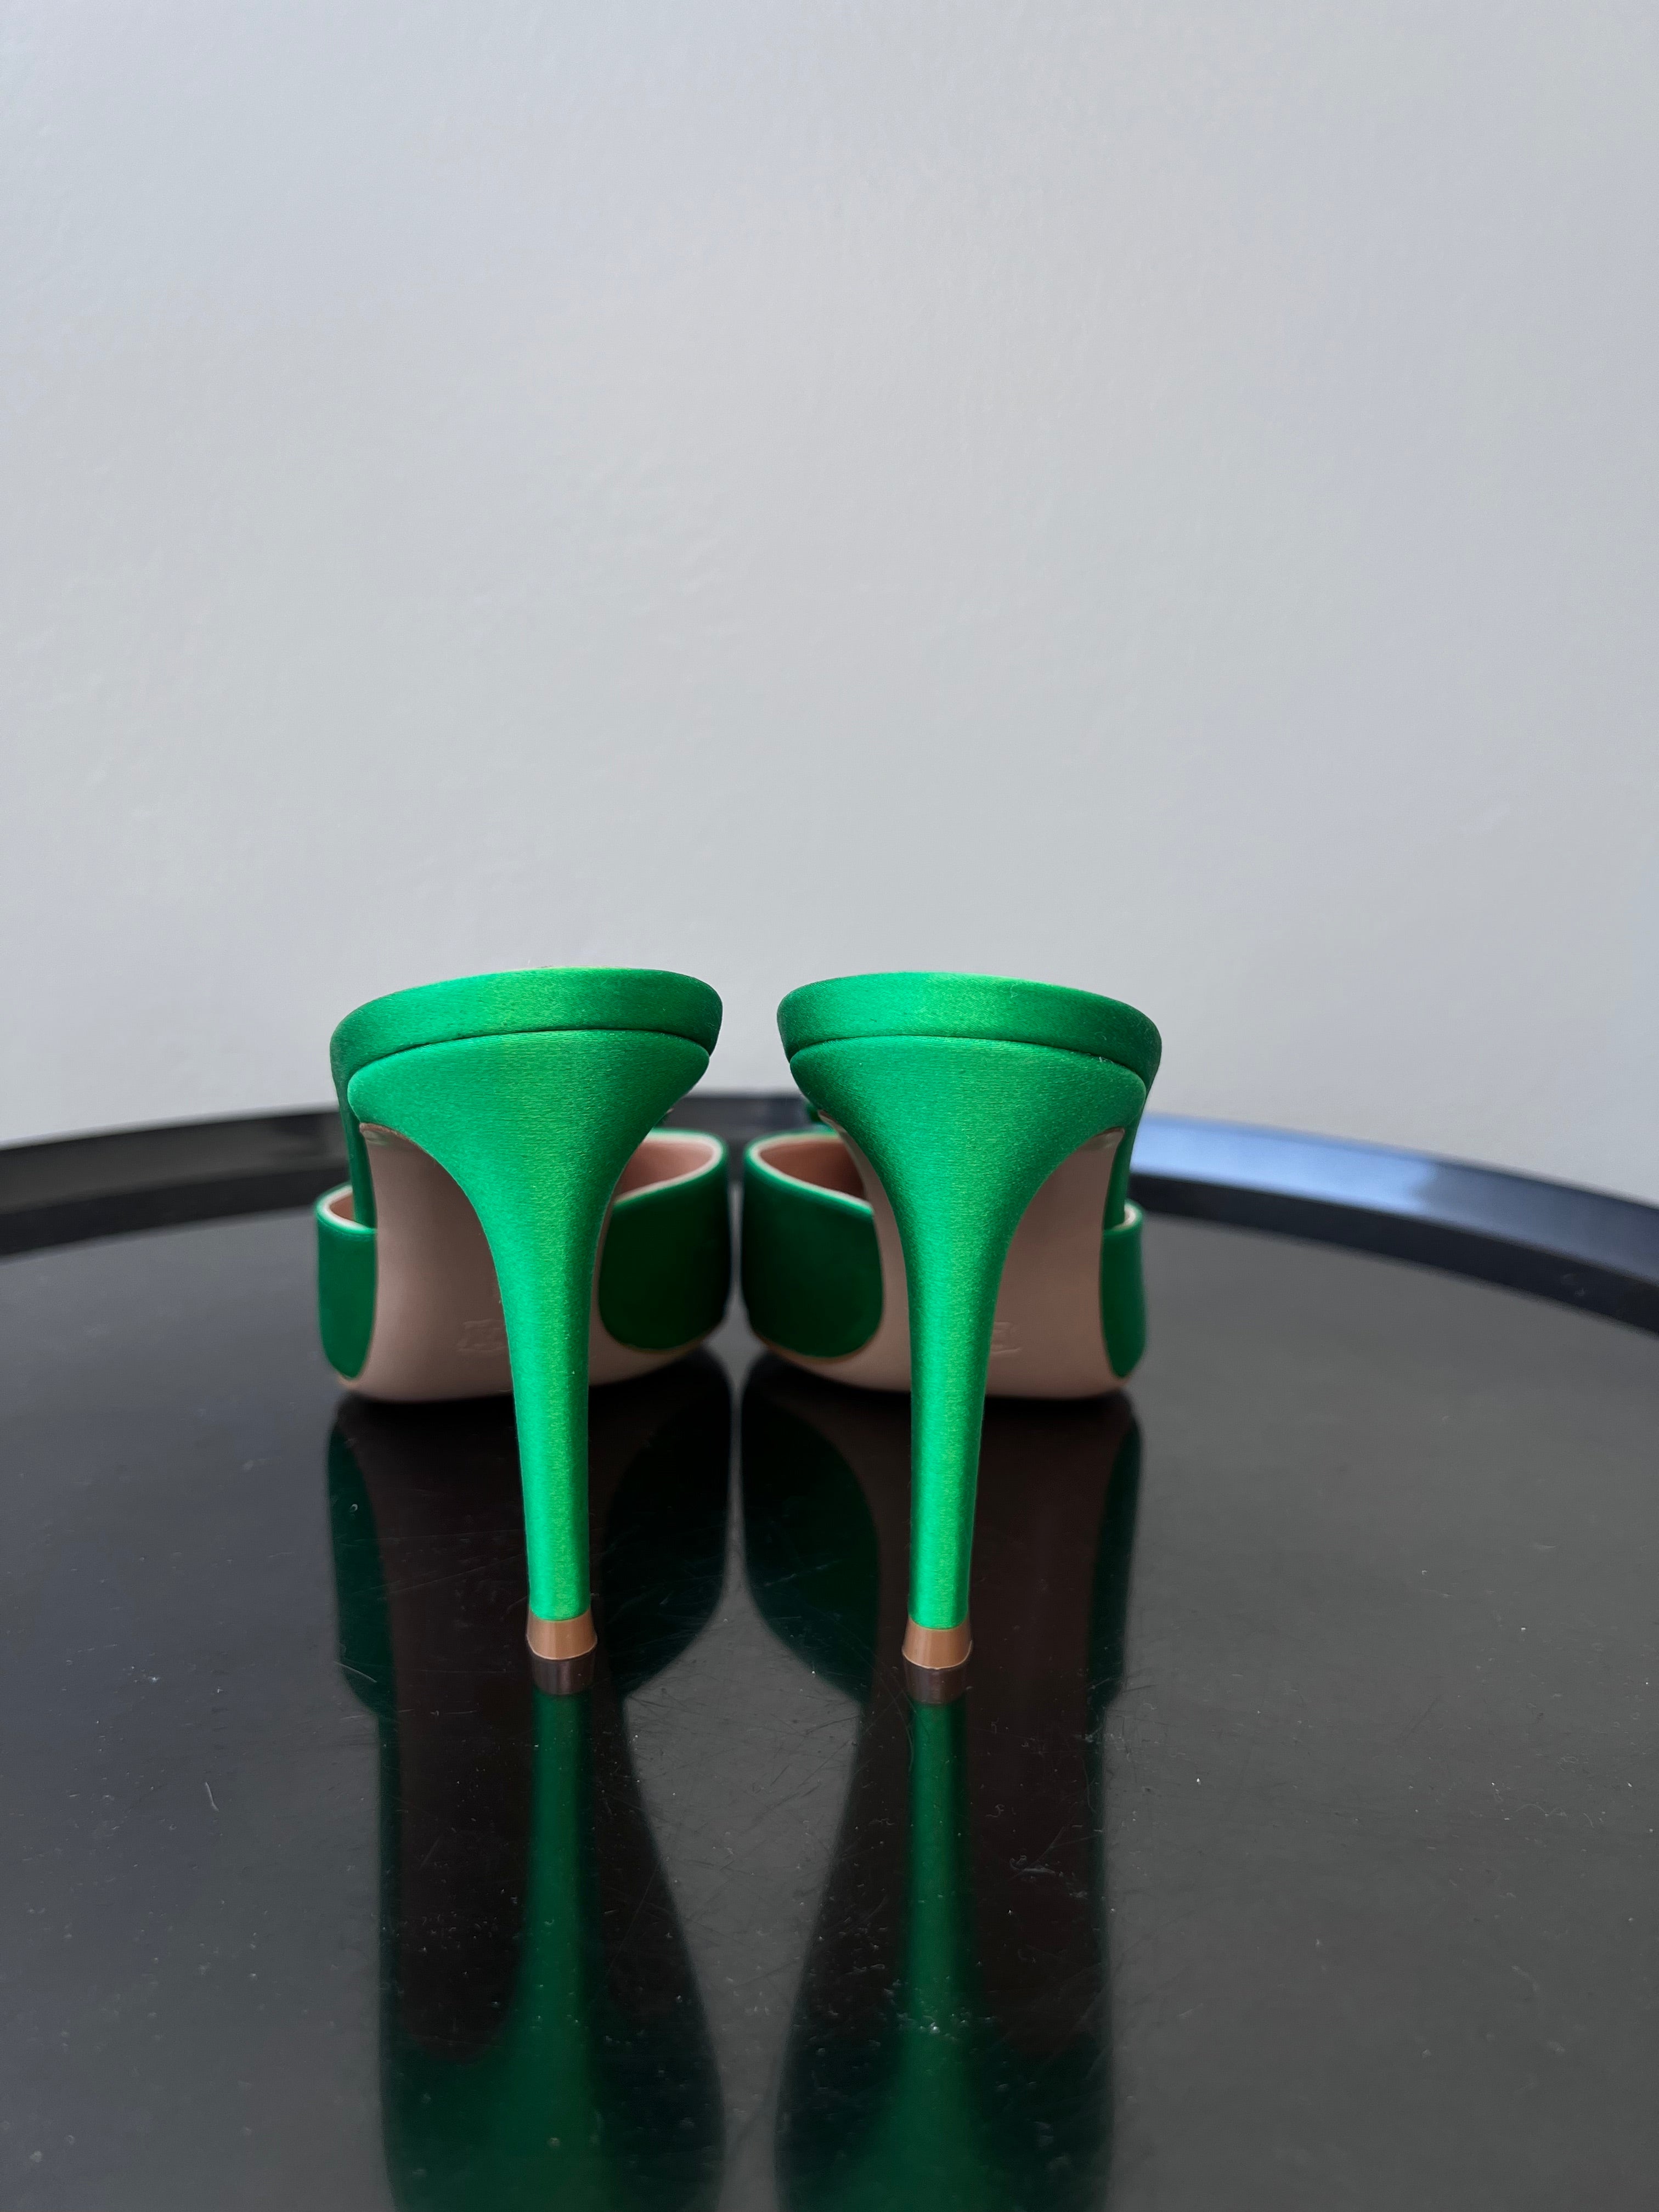 BRAND NEW ! Jaipur Mule 85 Raso Green heels - Gianvito Rossi